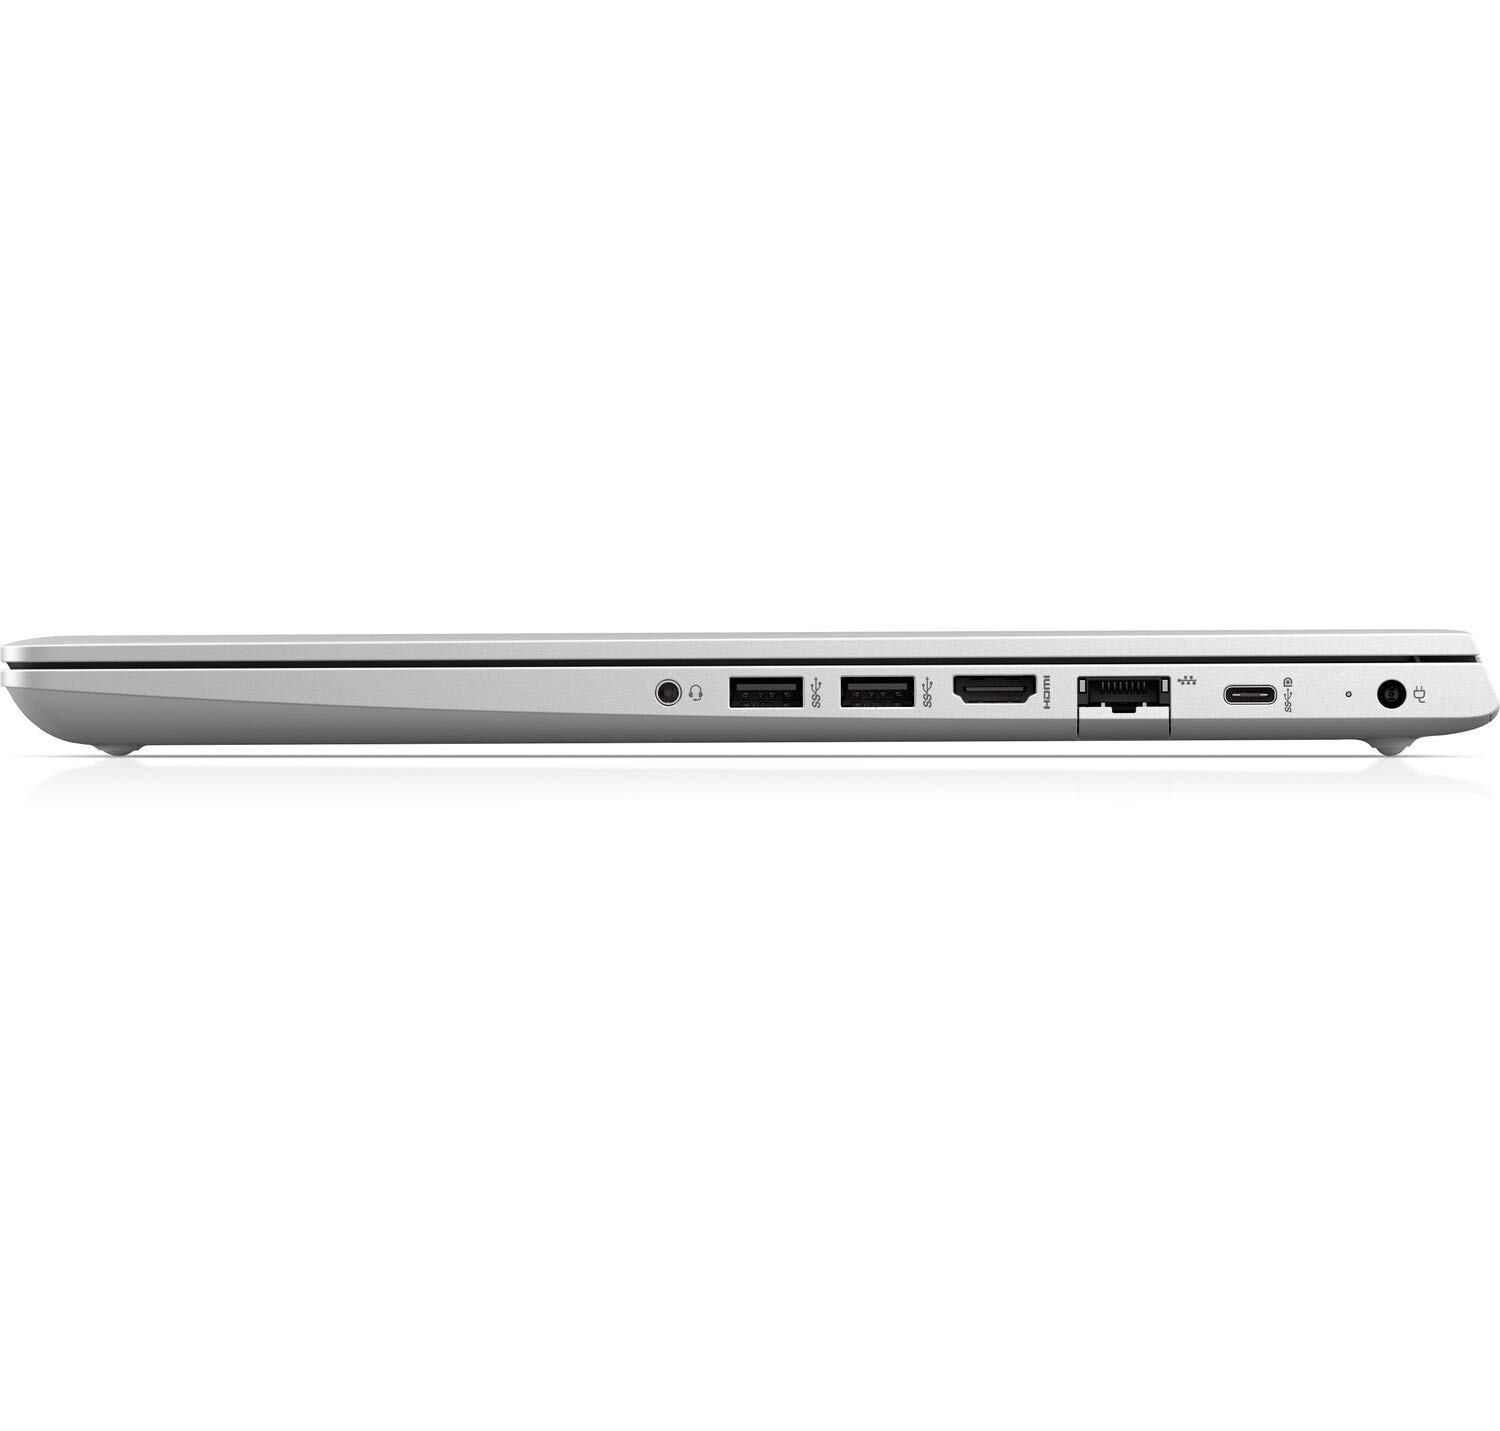 HP ProBook 450 Laptop, 15-15.99 inches (8WB97UT#ABA)